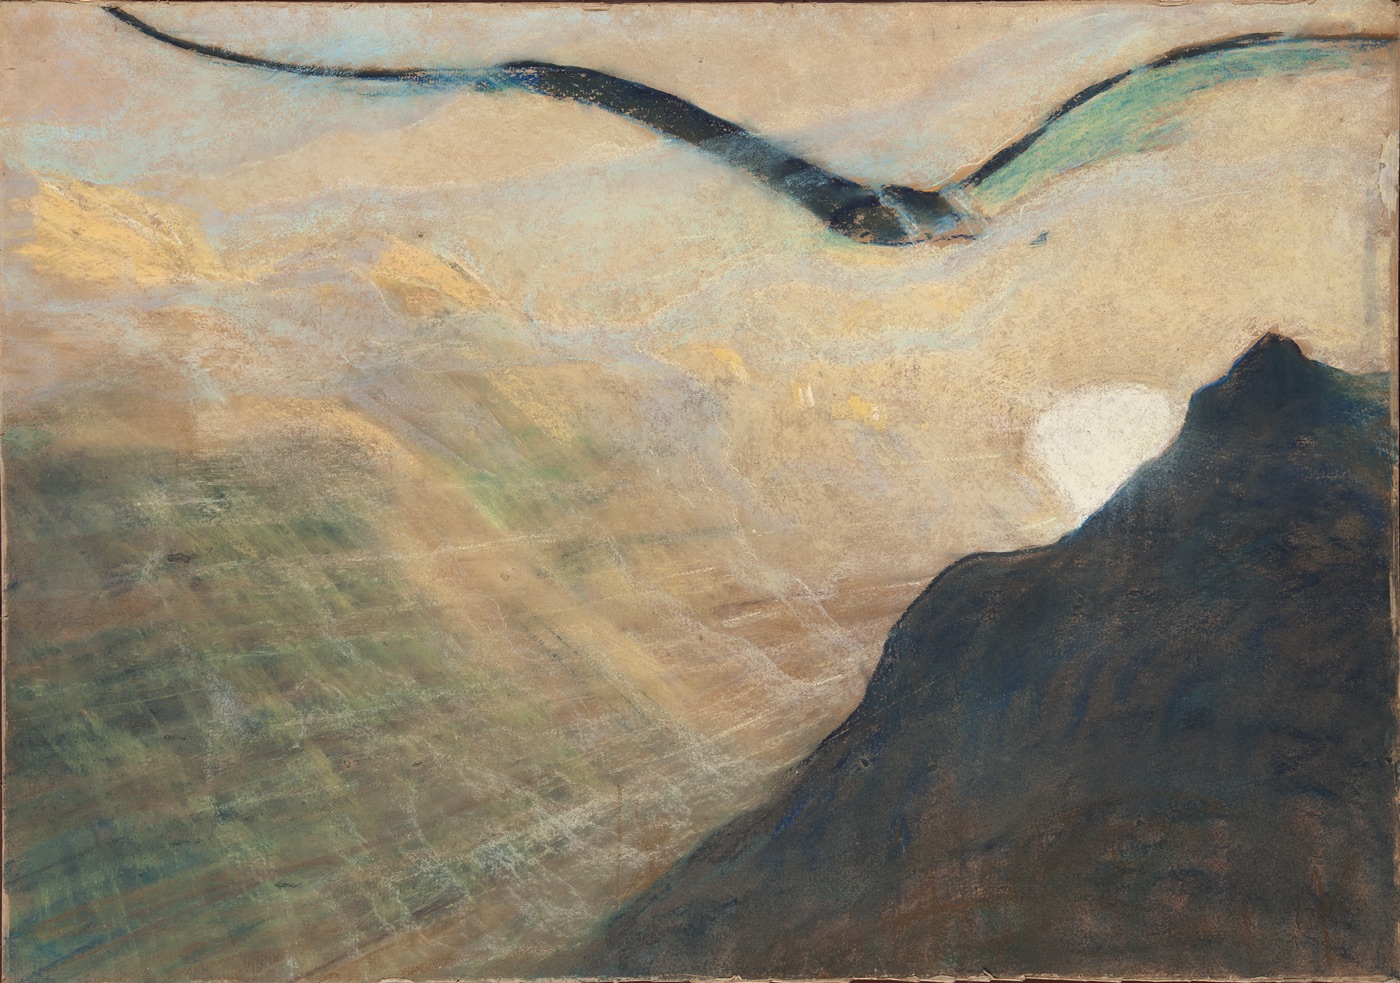 Haber by Mikalojus Konstantinas Čiurlionis - 1905 - 29.6 x 21.3 cm 